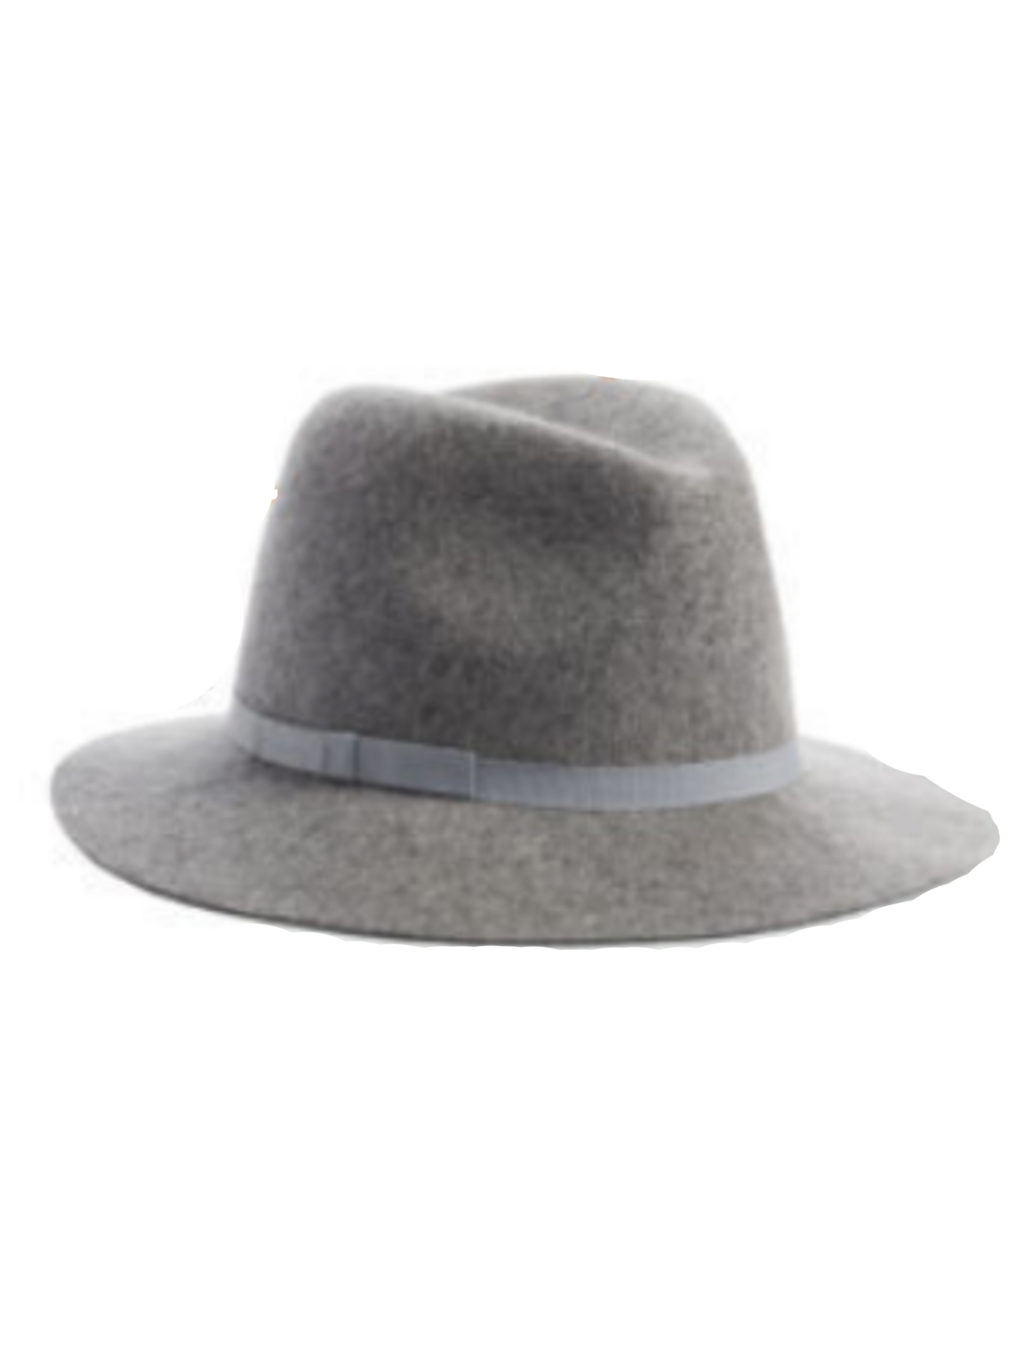 Nordstrom Anniversary Sale Felt Hat